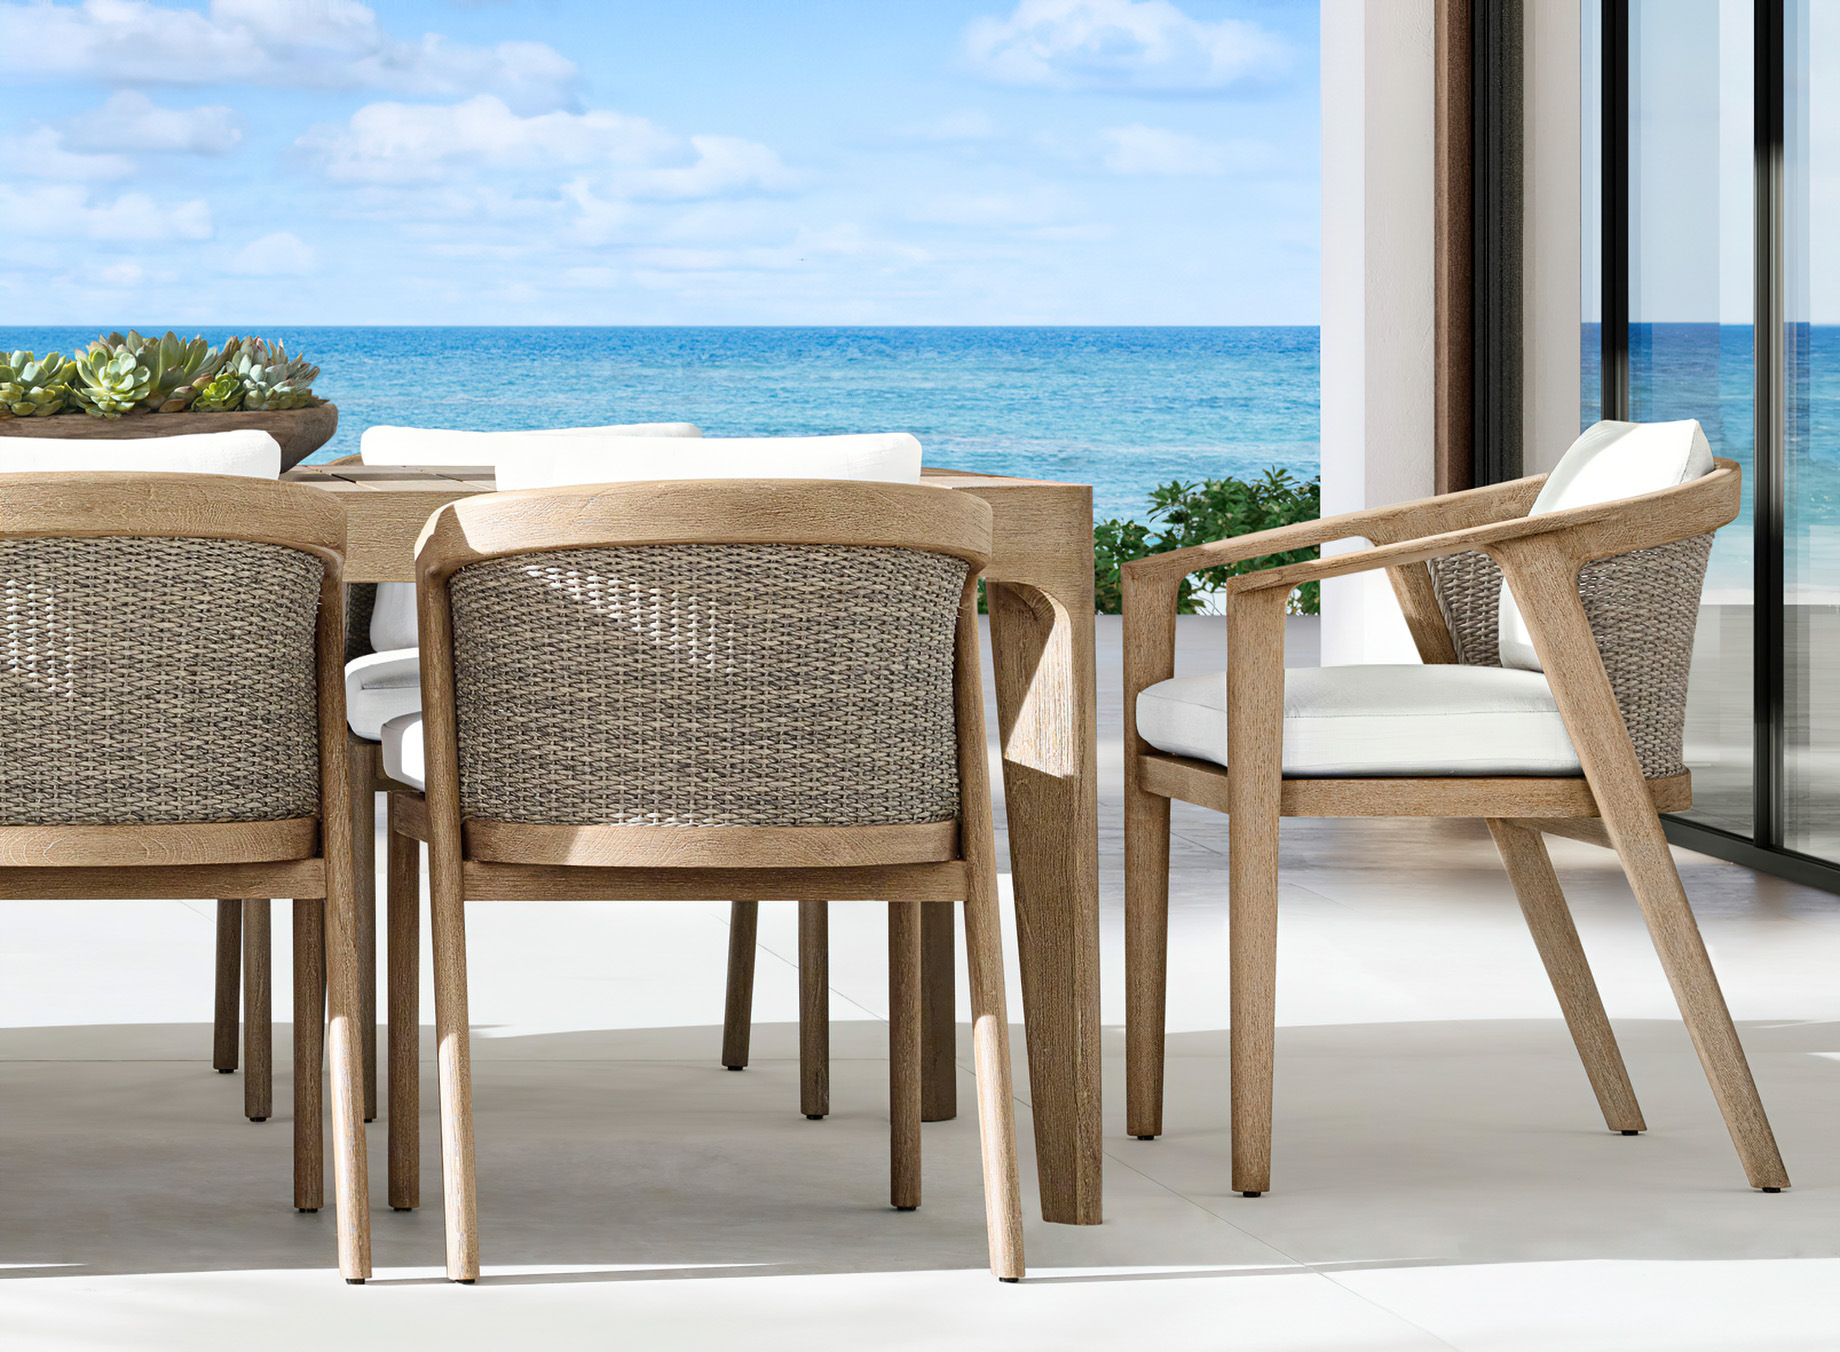 Malta Teak Collection Outdoor Furniture Design for RH – Ramon Esteve – Design Symmetry